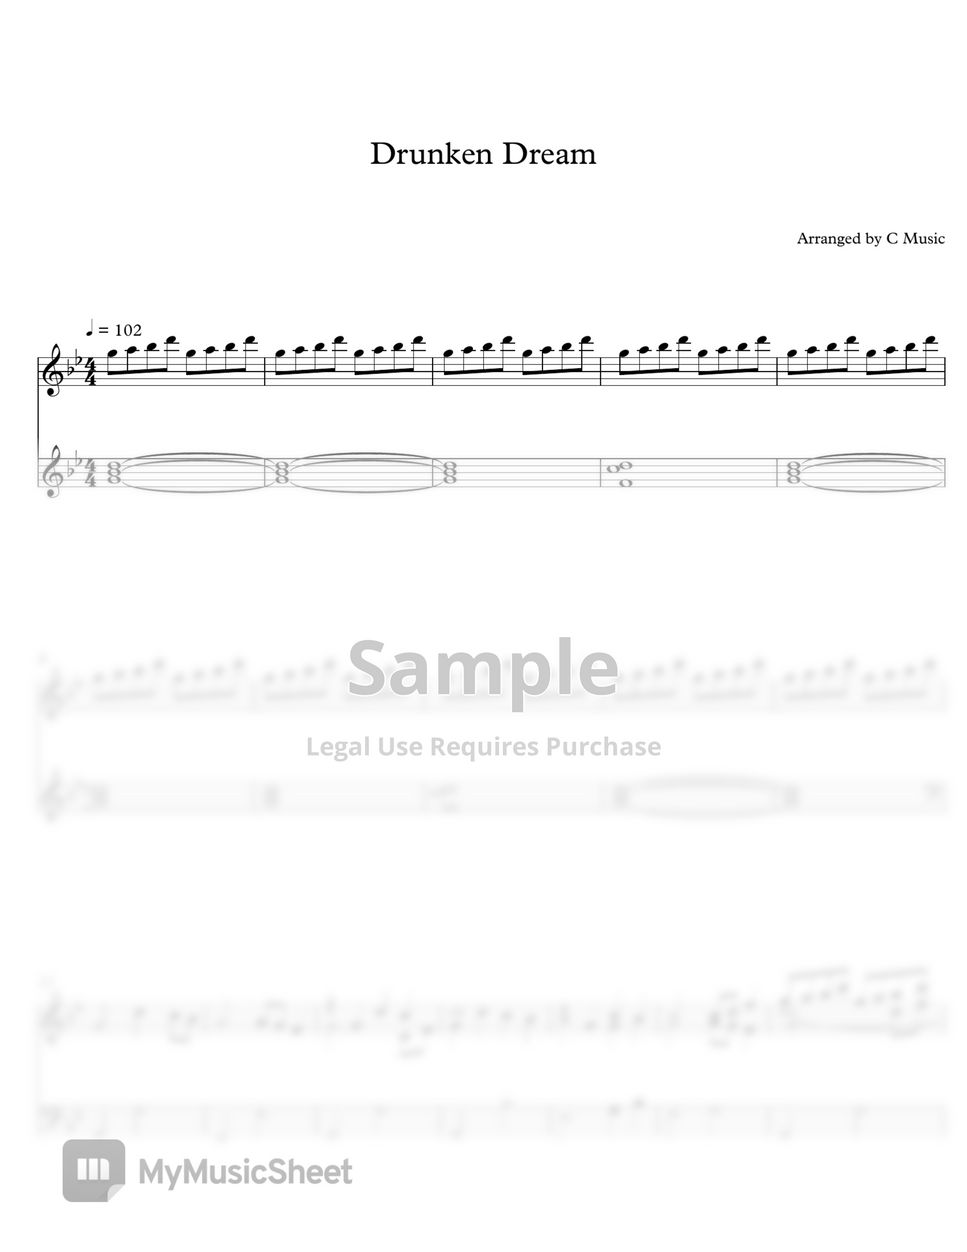 林海 - 醉夢 Drunken Dream (The Untamed 陳情令) by C Music